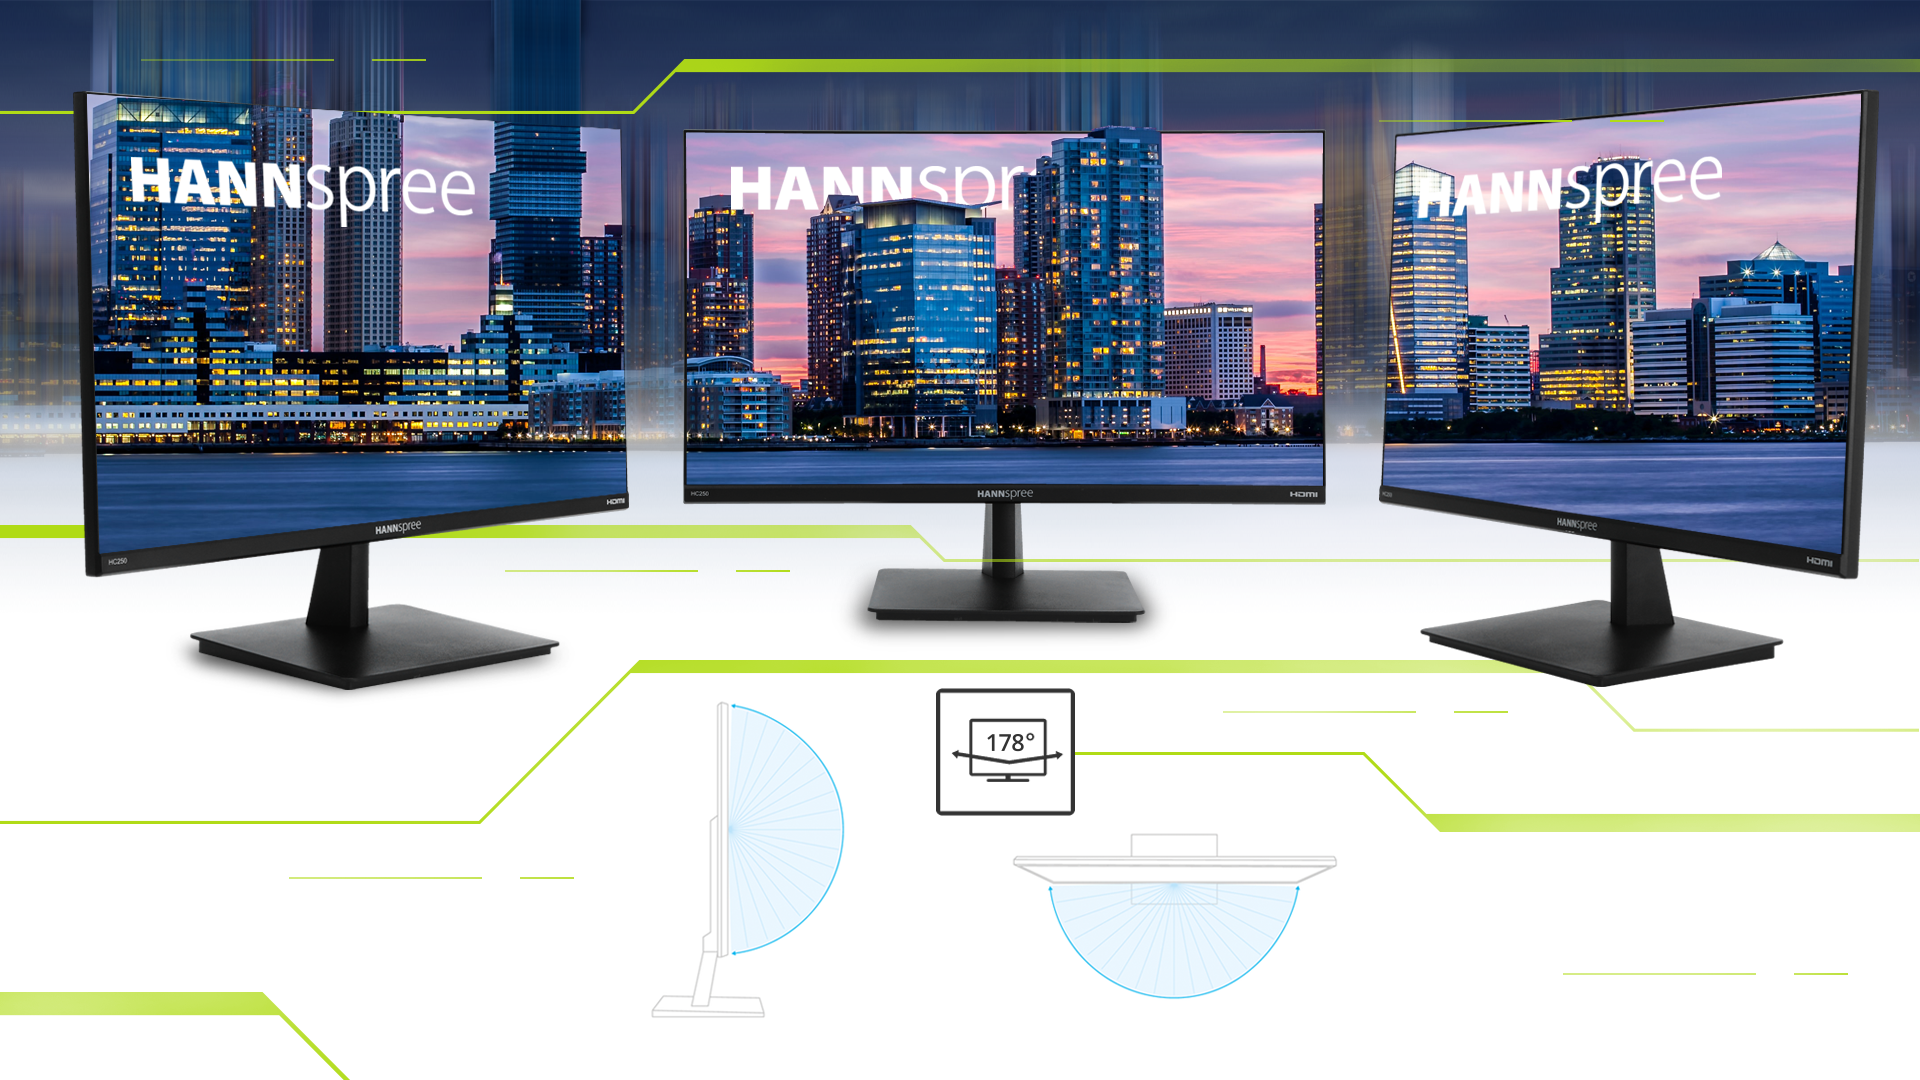 HC251PFB monitor features a 16:9 aspect ratio